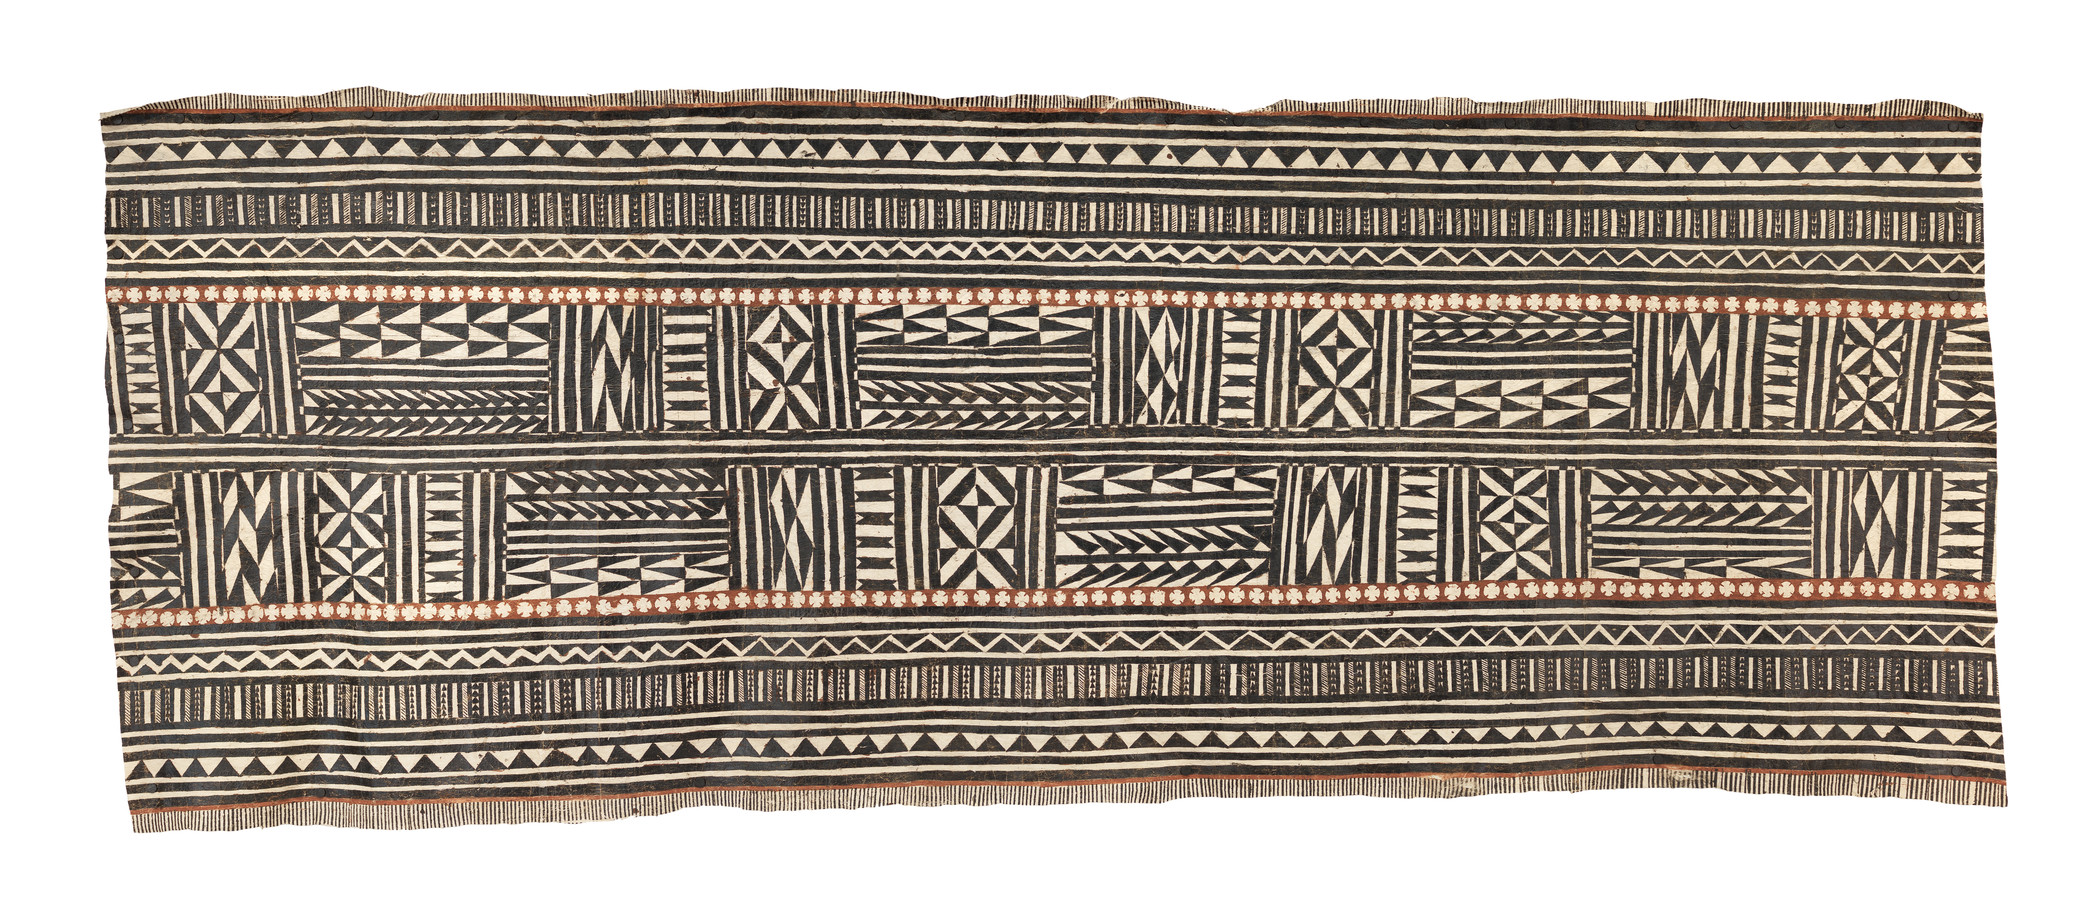 Barkcloth (Masi bolabola), Fiji, probably Cakaudrove, mid-19th century, Los Angeles County Museum of Art, gift of Mark and Carolyn Blackburn, photo © Museum Associates/LACMA